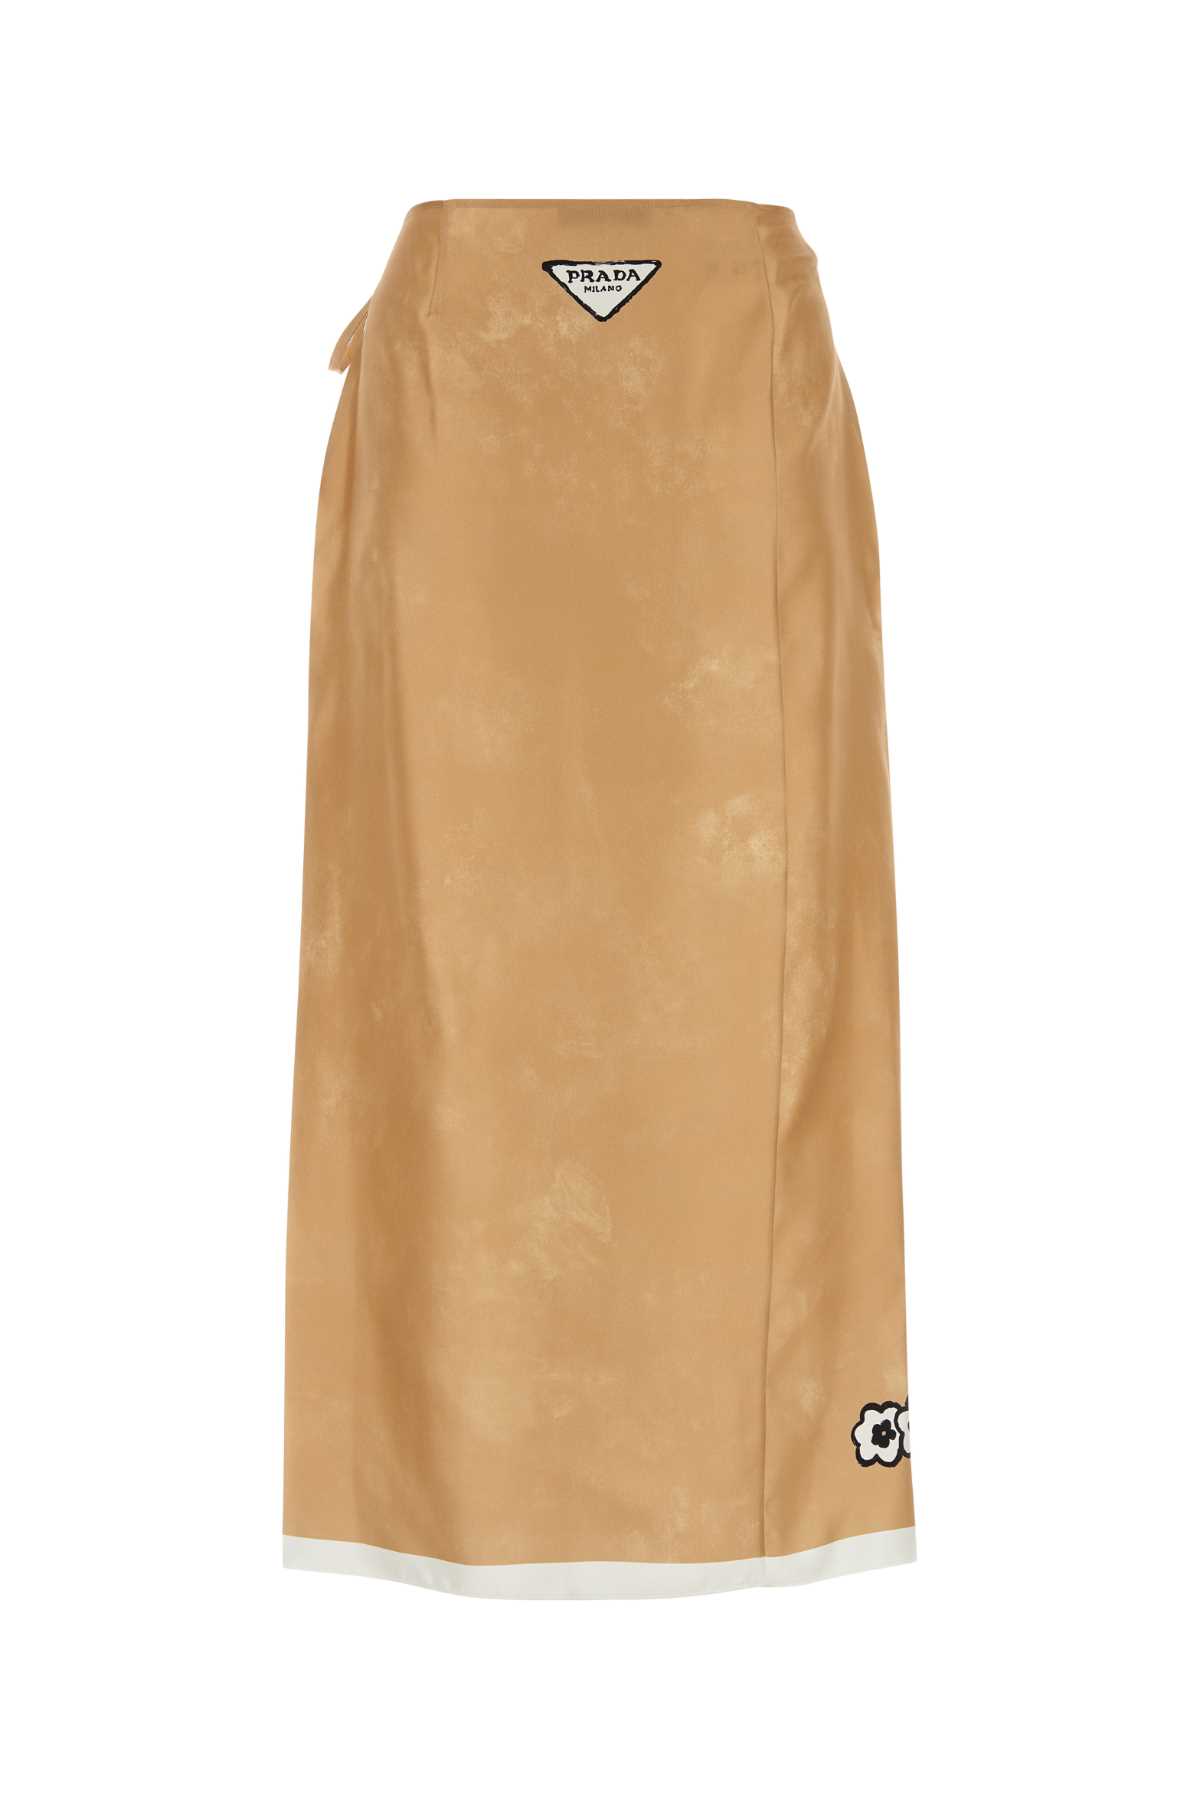 Prada Camel Silk Skirt In Cordanaturale